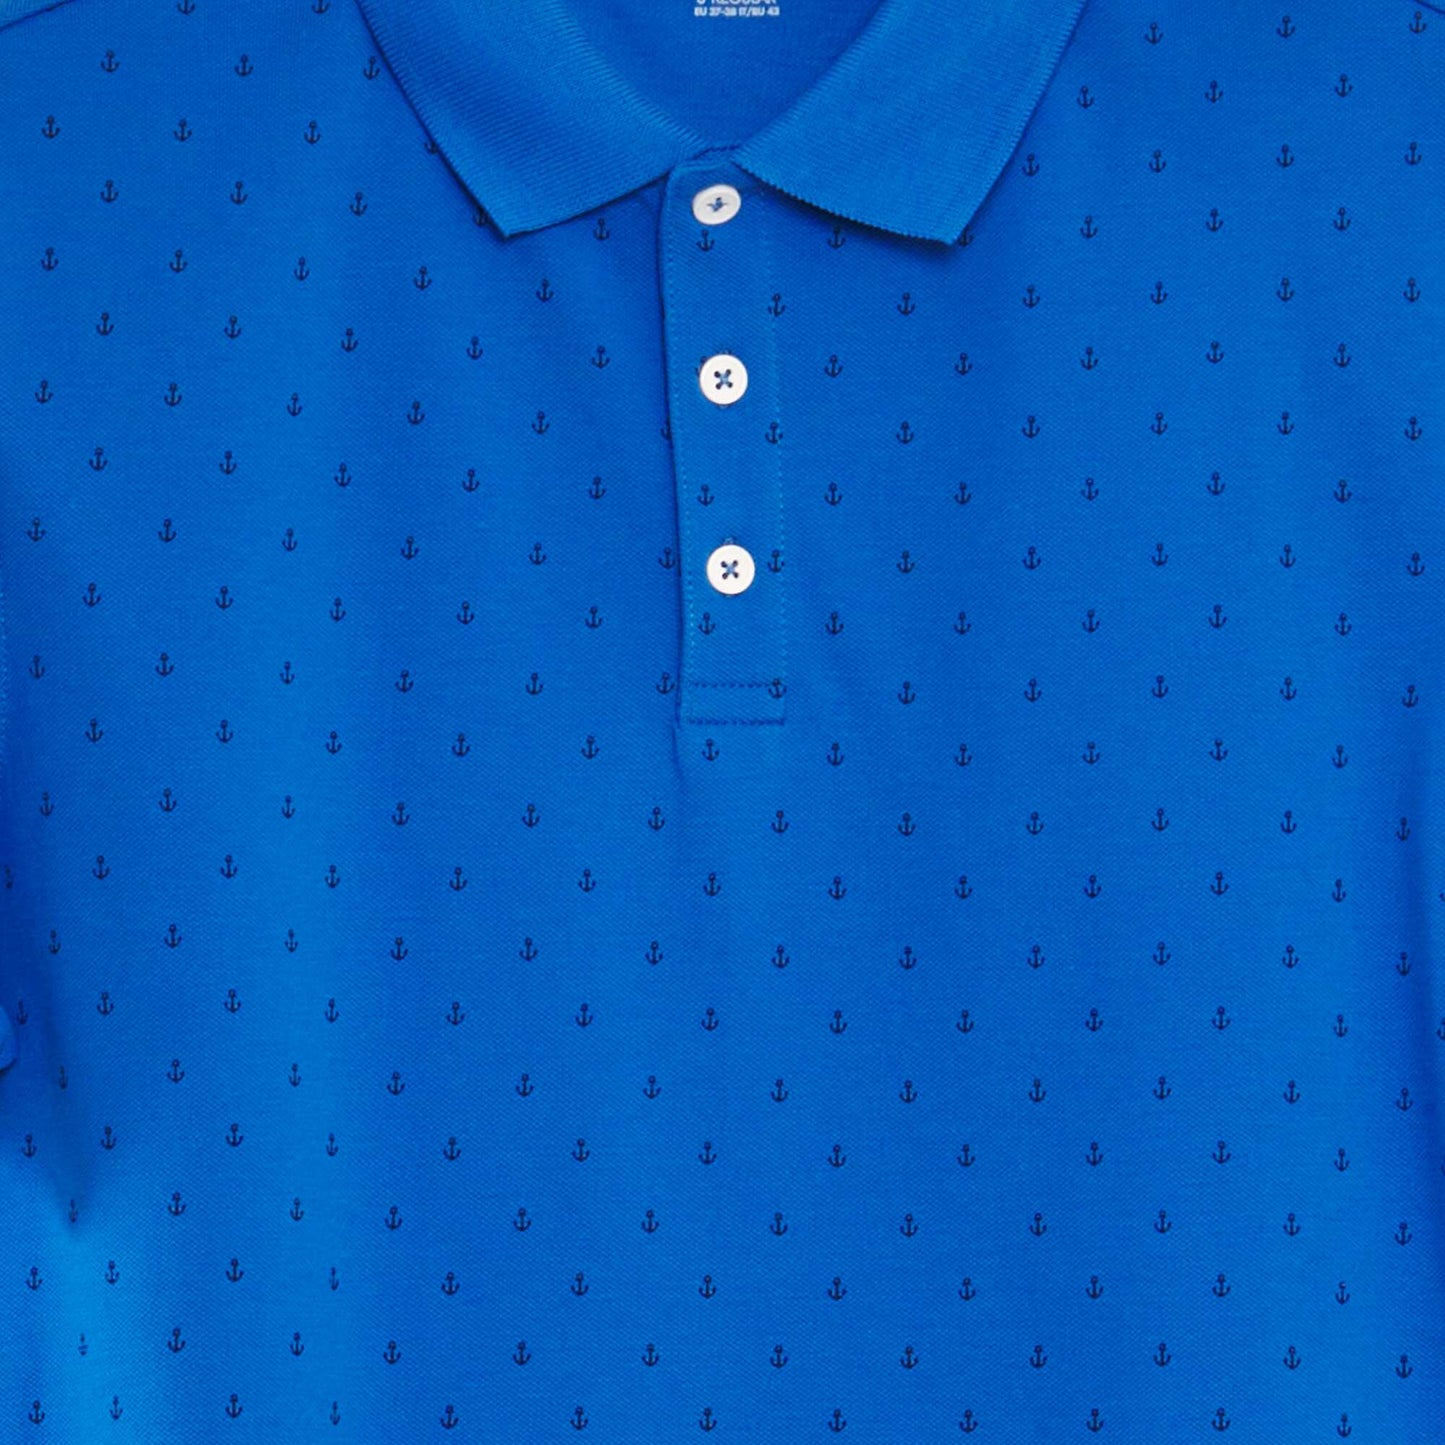 Fancy polo shirt BLUE